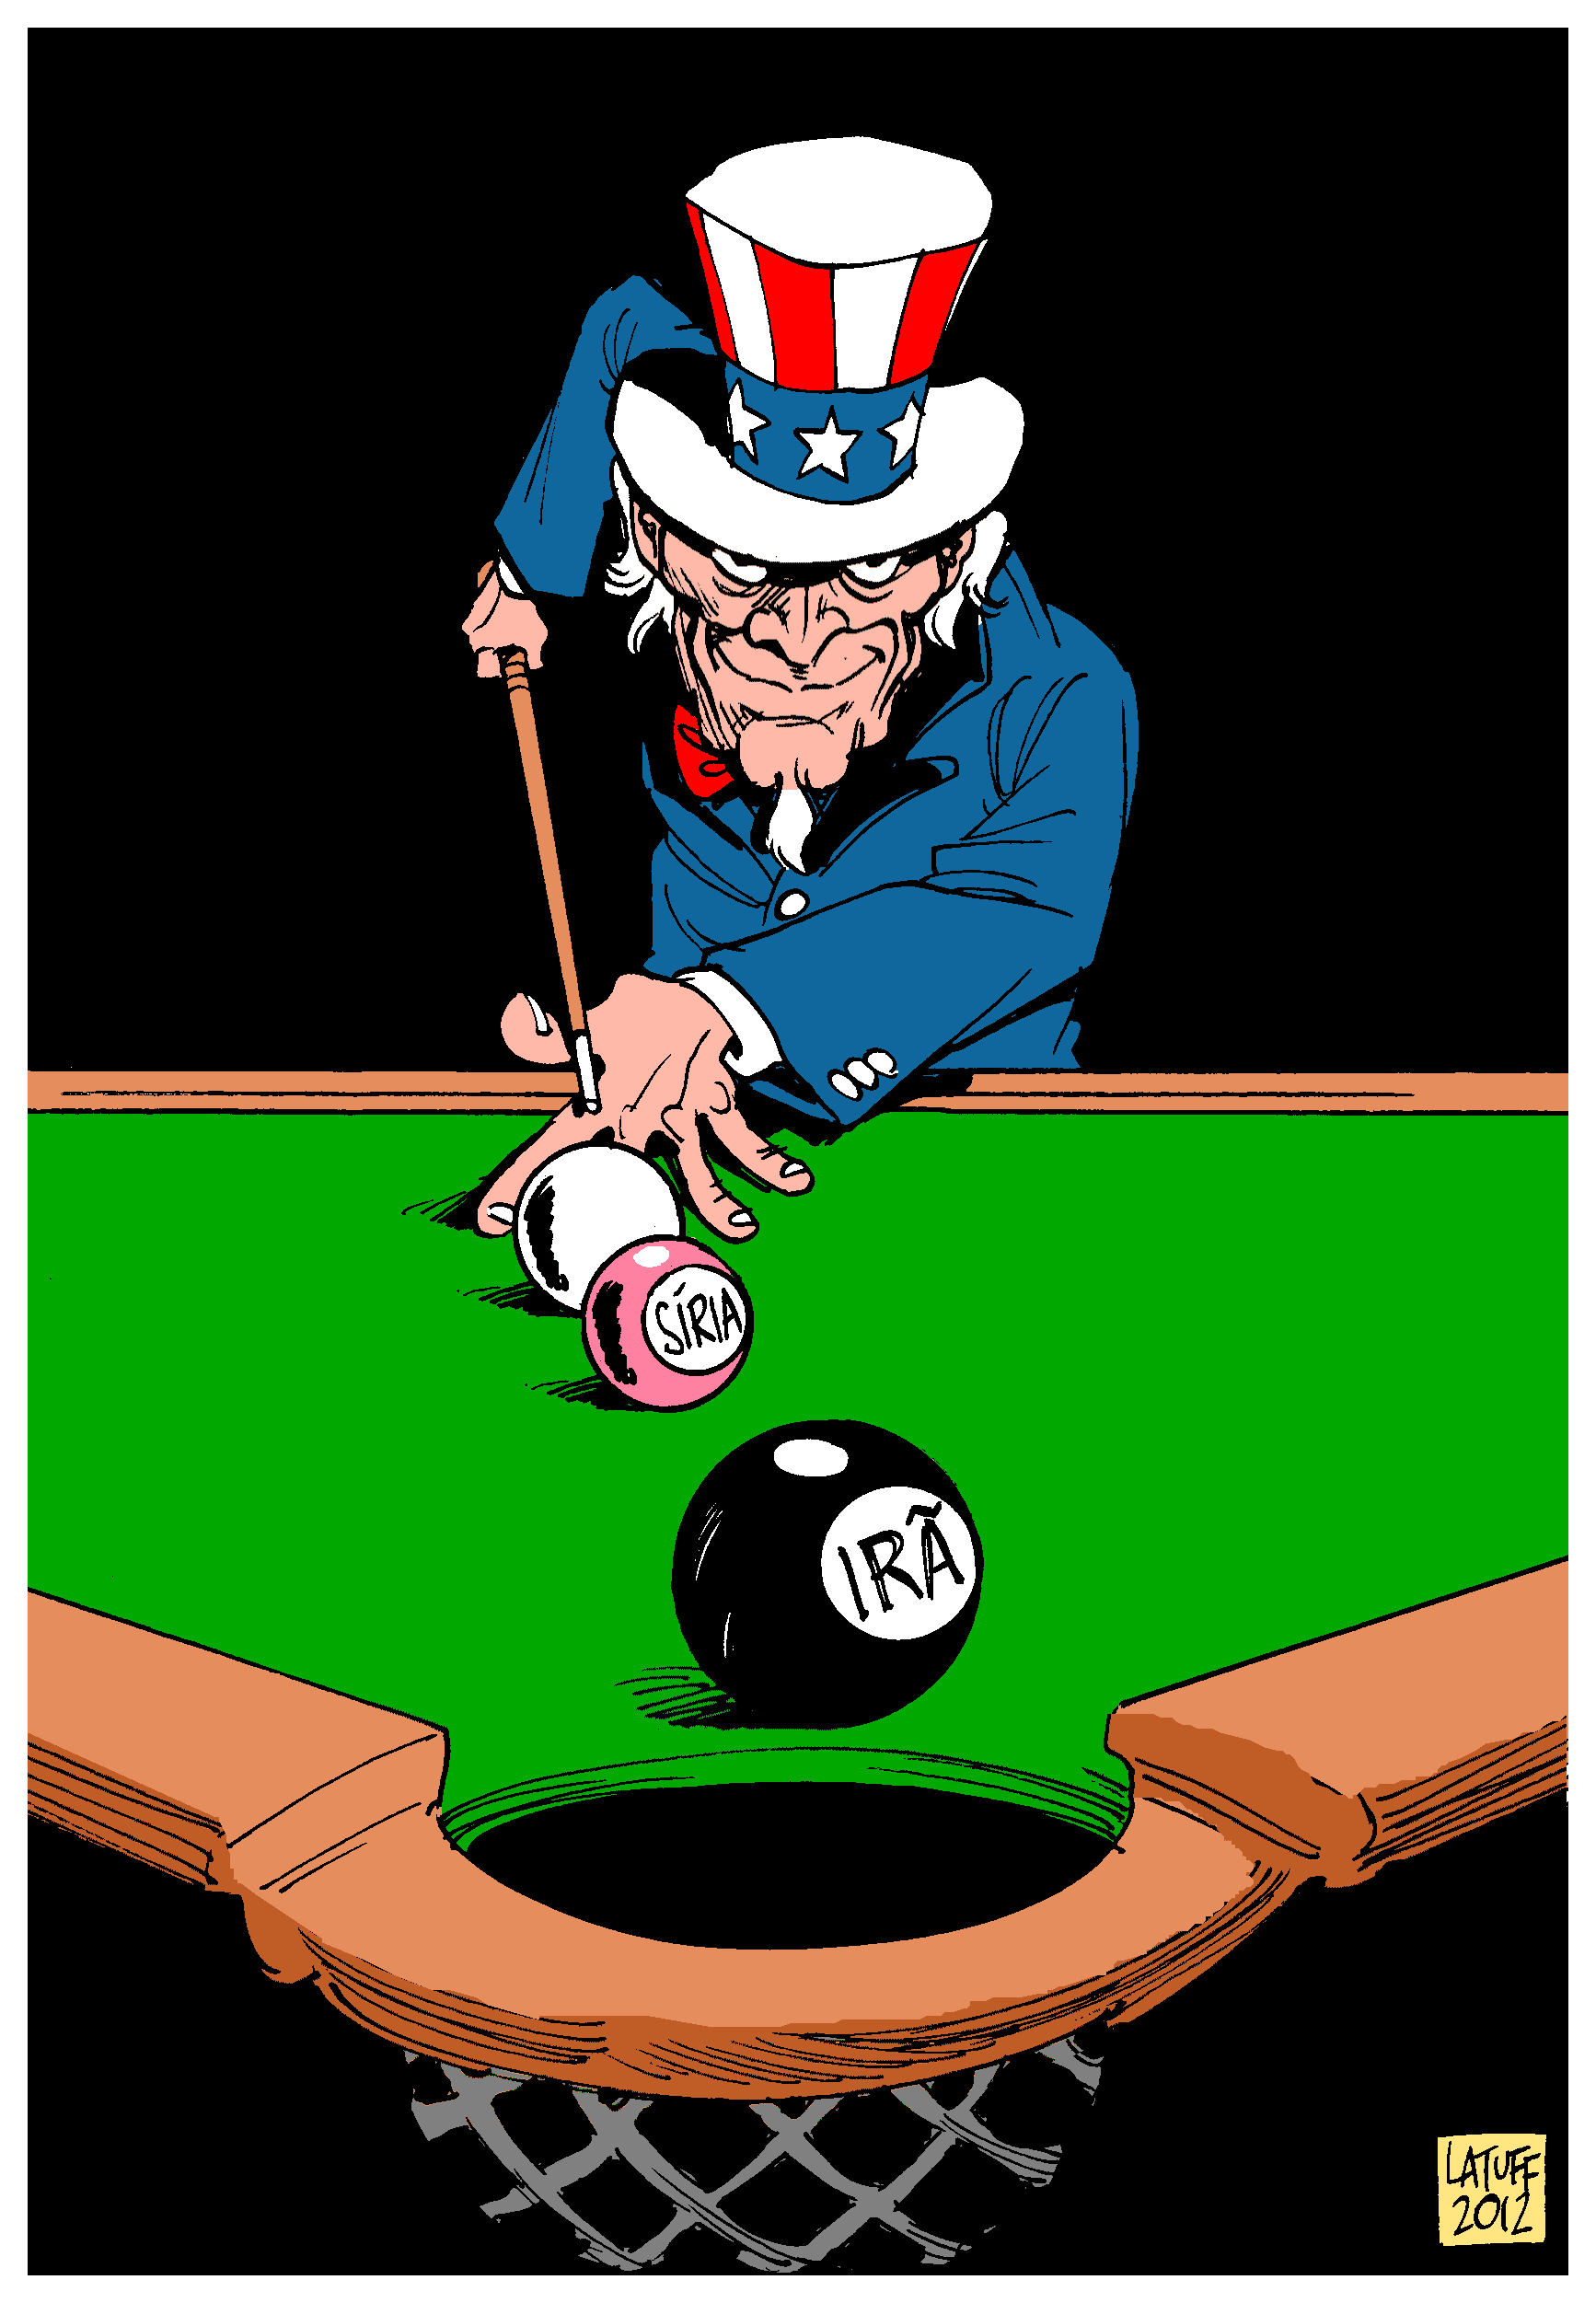 O grande propósito, a bola da vez - Síria x Irã (caricatura)